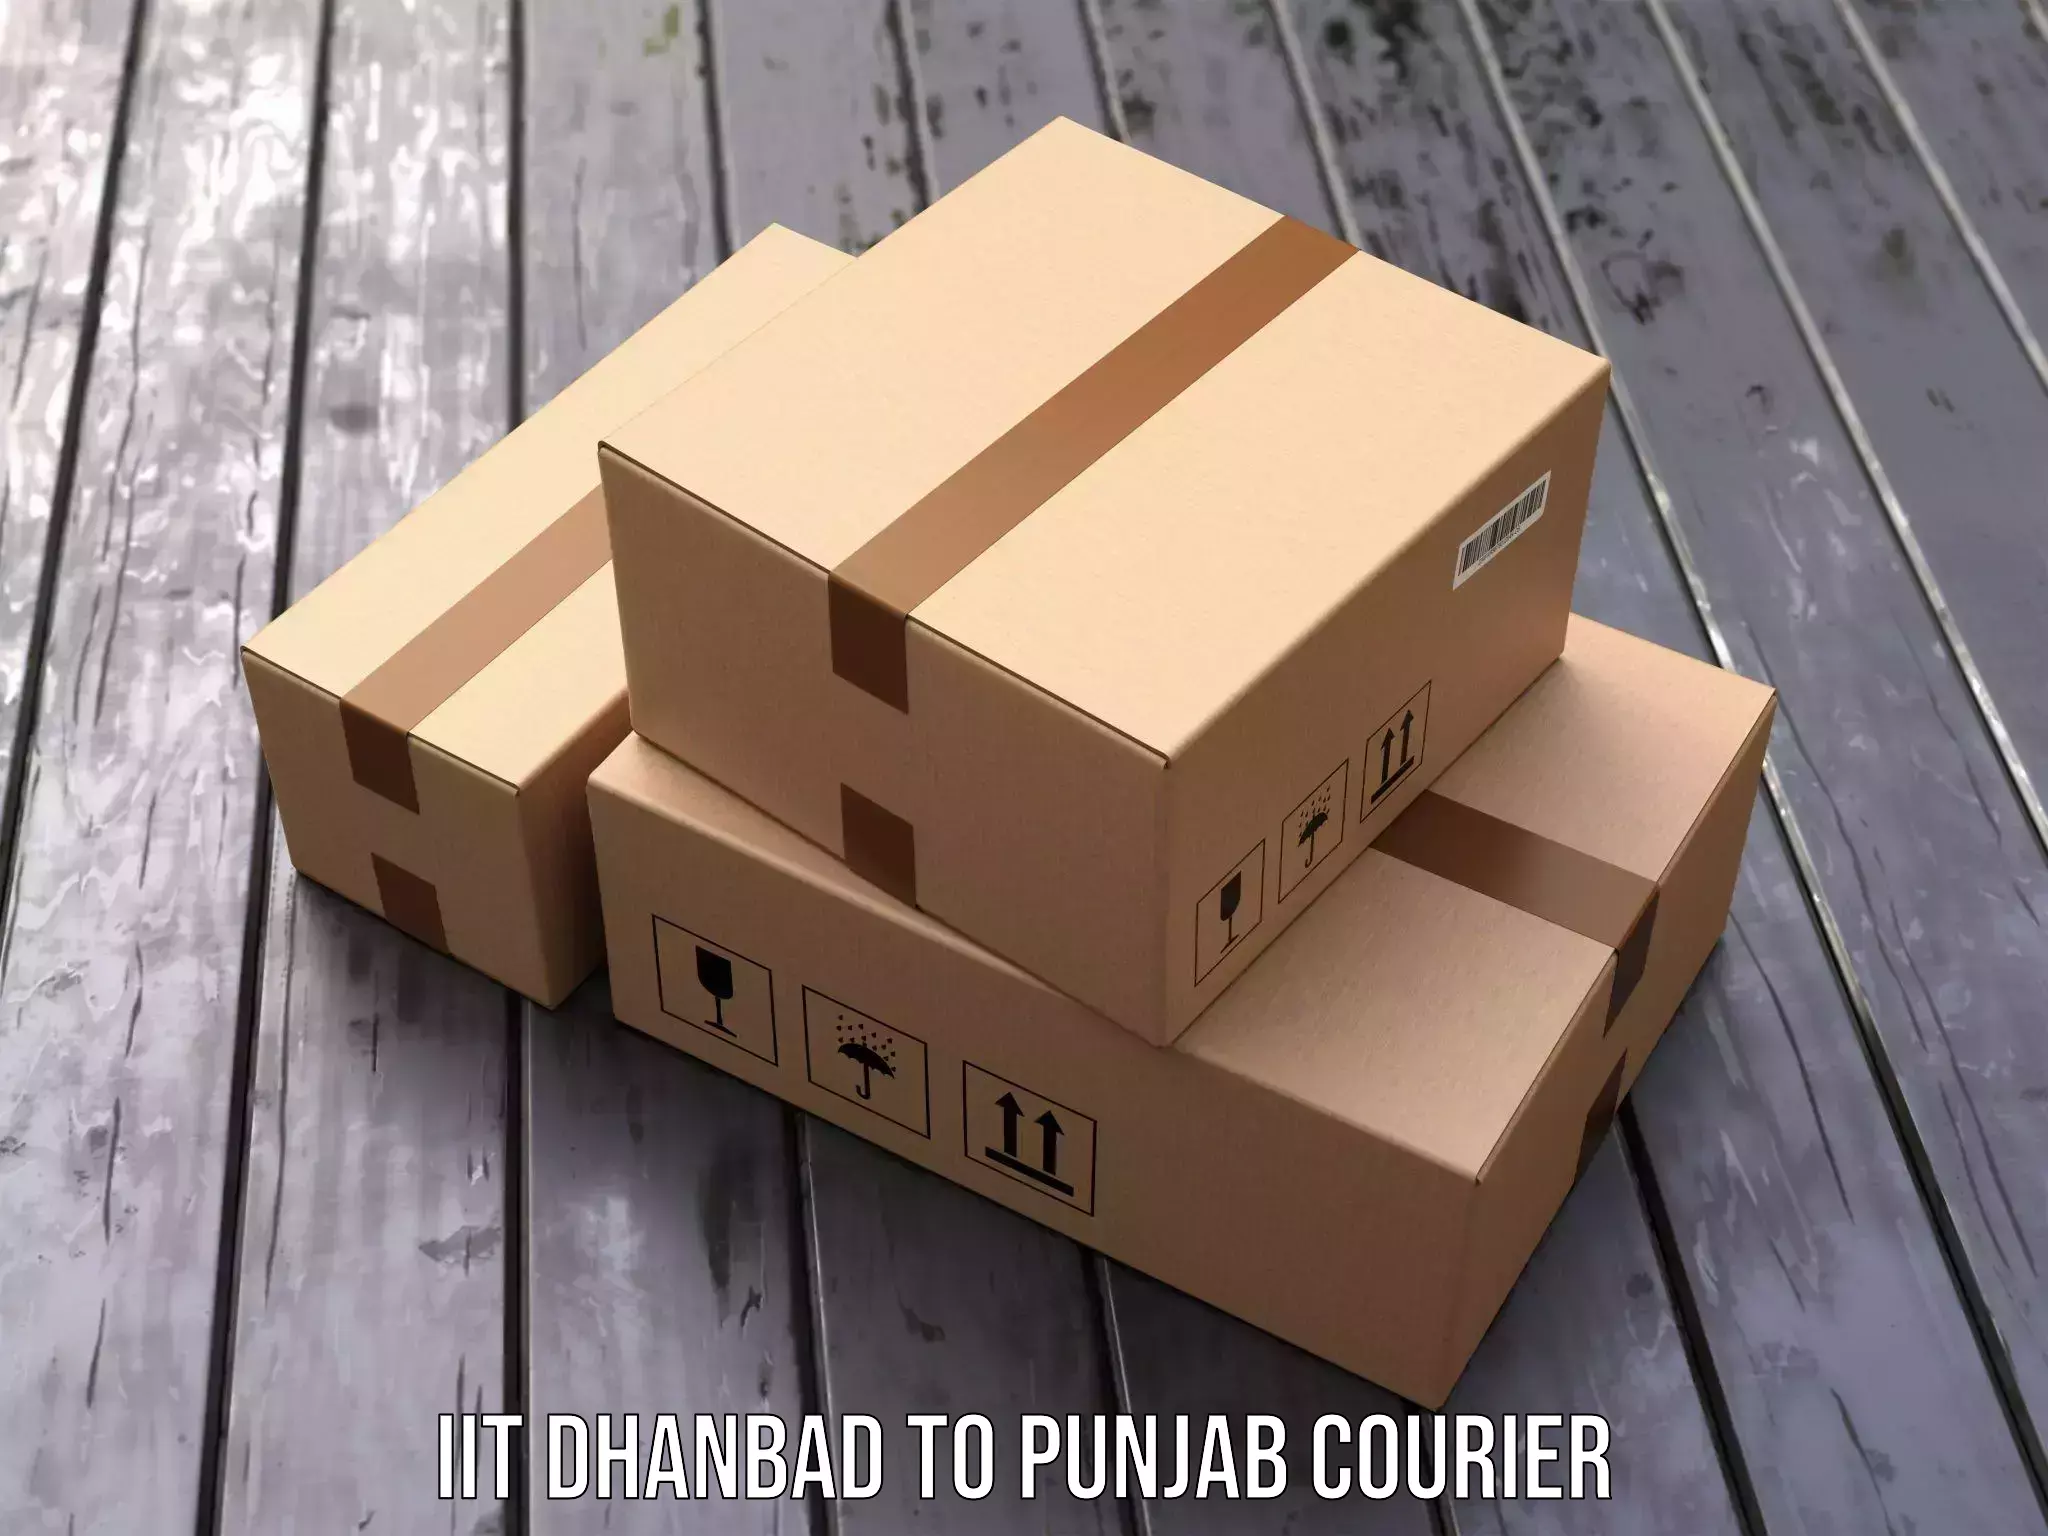 On-demand shipping options IIT Dhanbad to Patiala